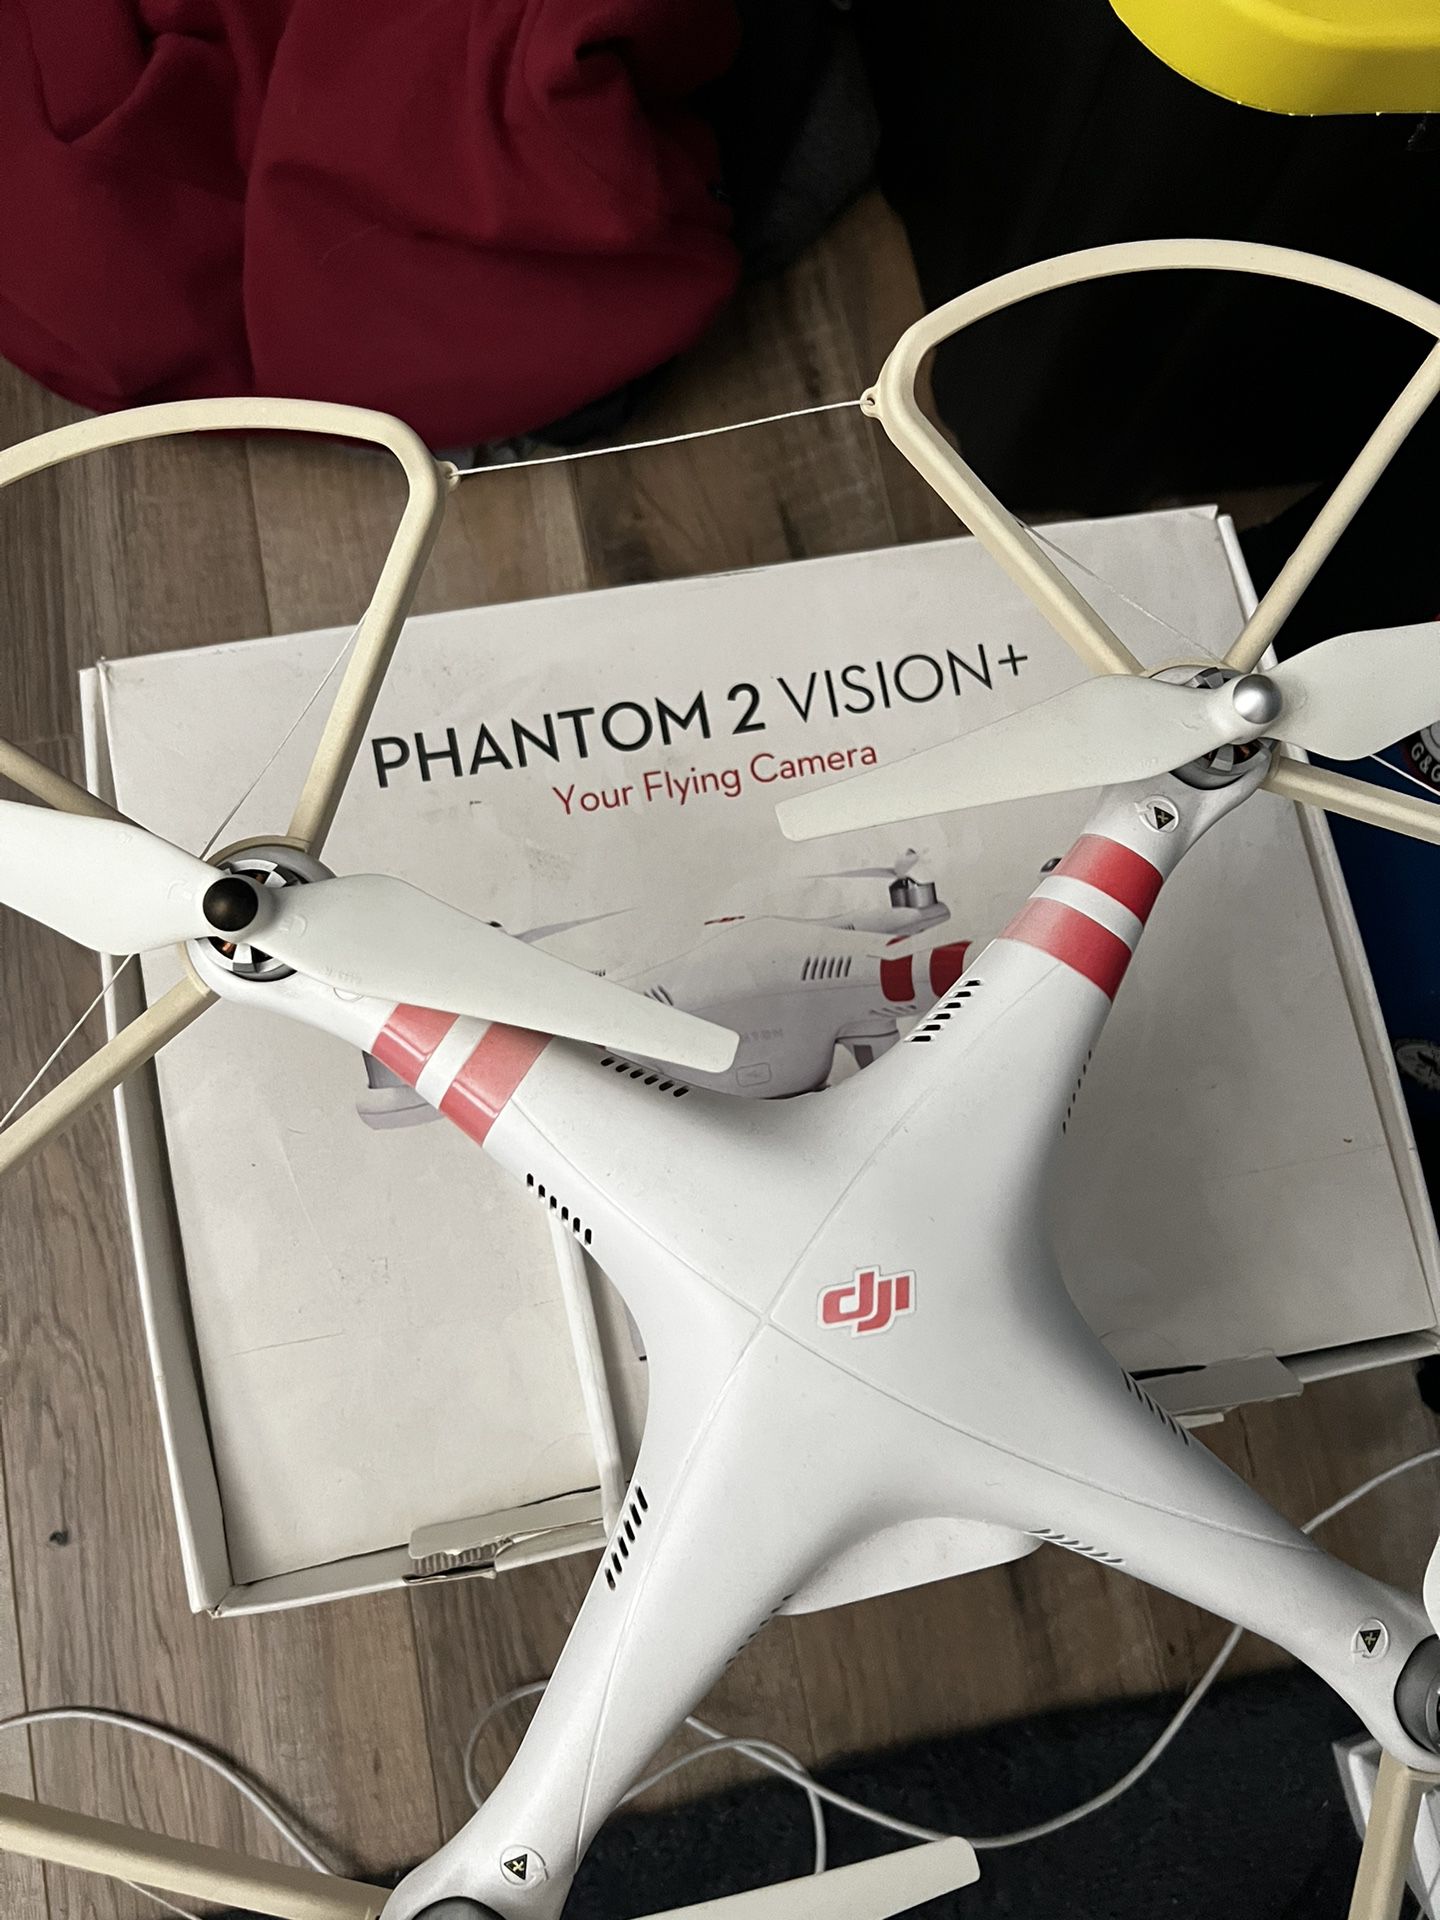 Phantom 2 Vision+ Drone